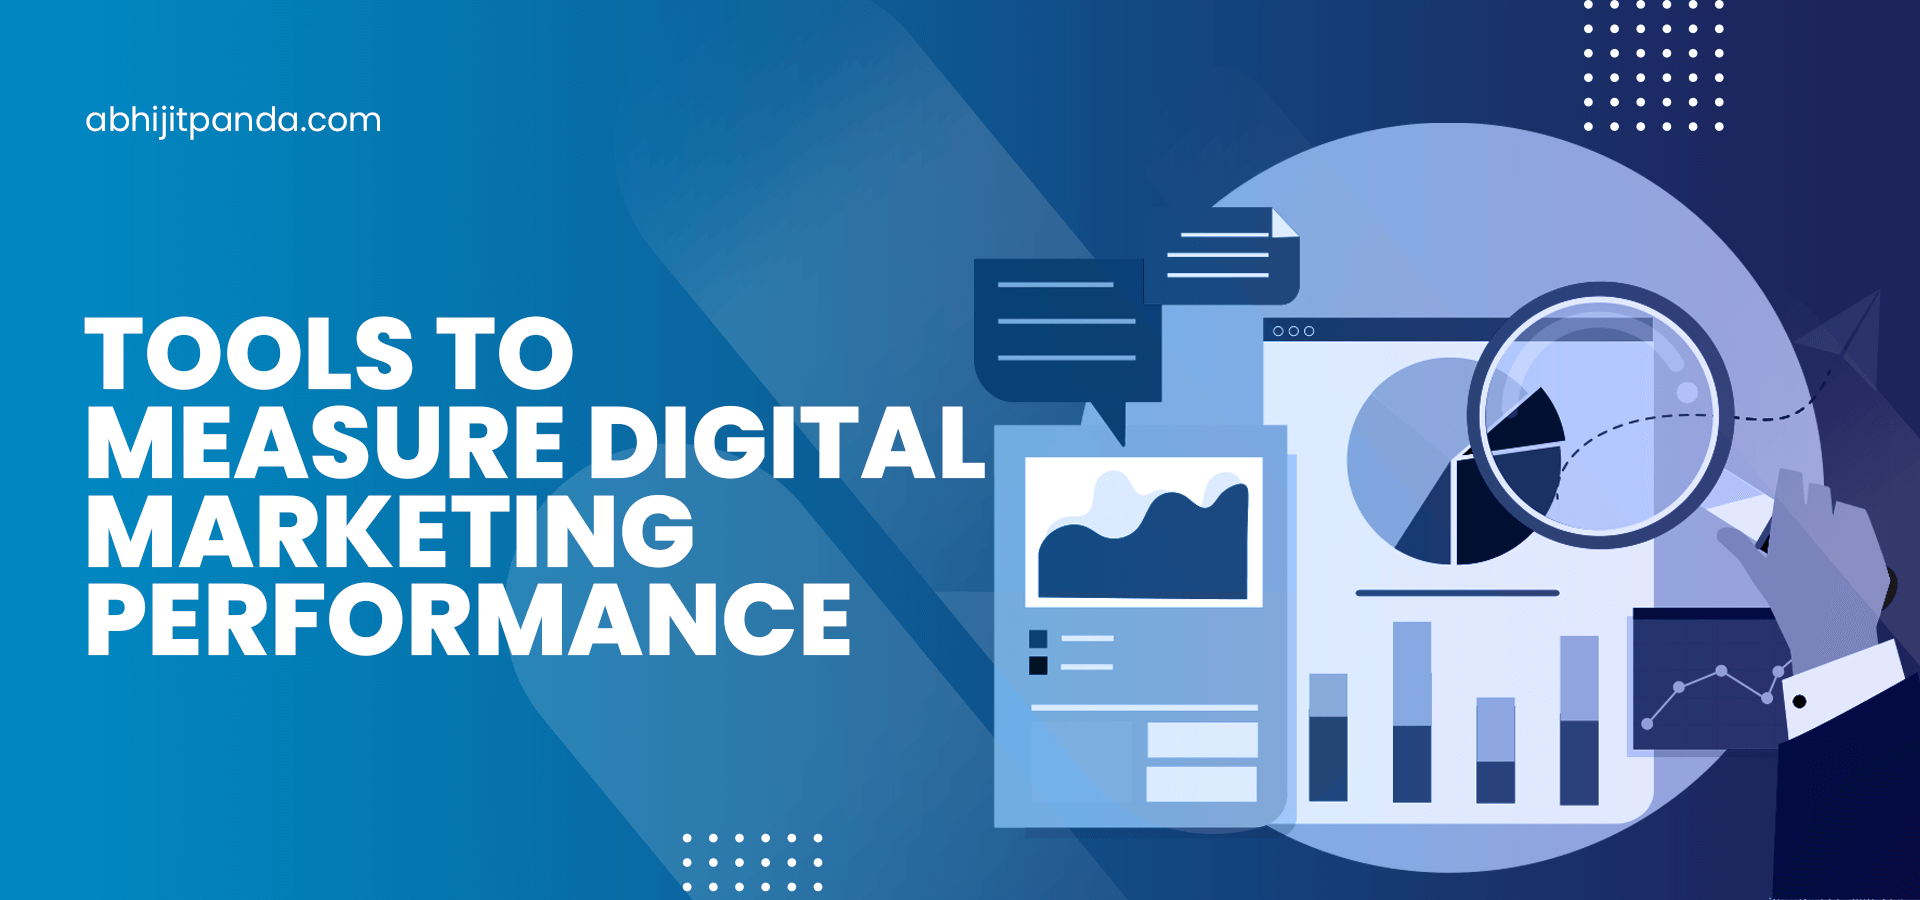 Tools to Measure Digital Marketing Performance